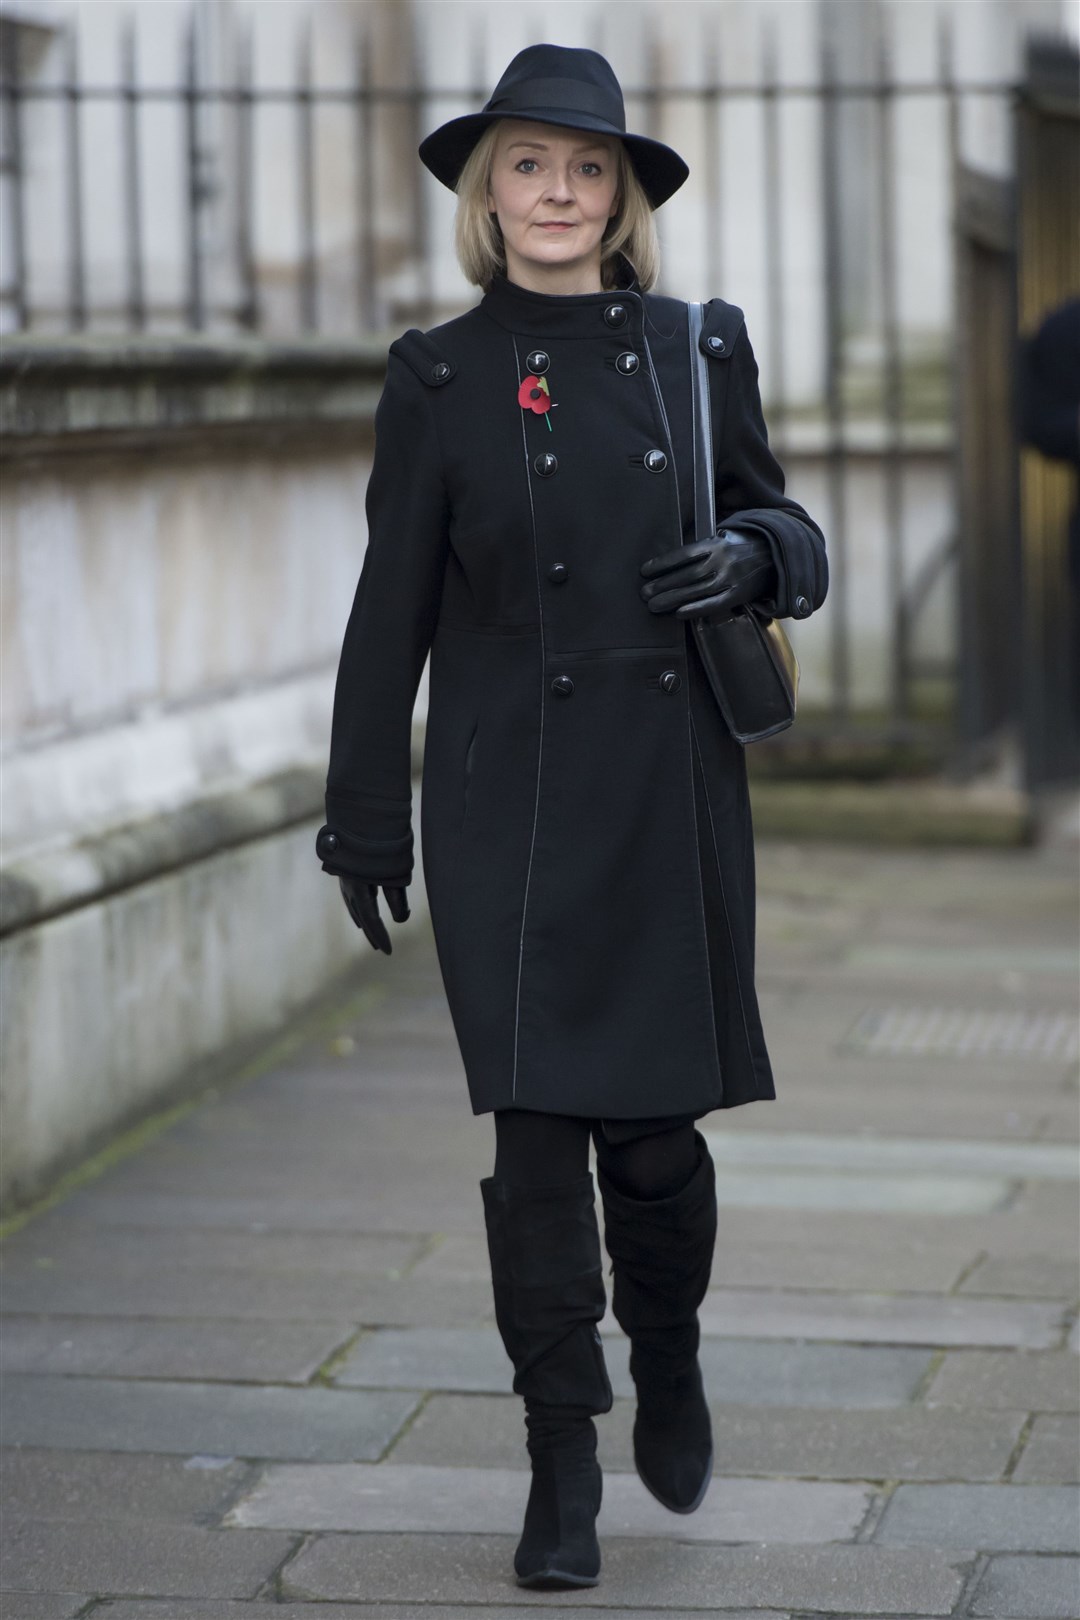 Then-justice secretary Liz Truss walks through Downing Street in 2016 (David Mirzoeff/PA)